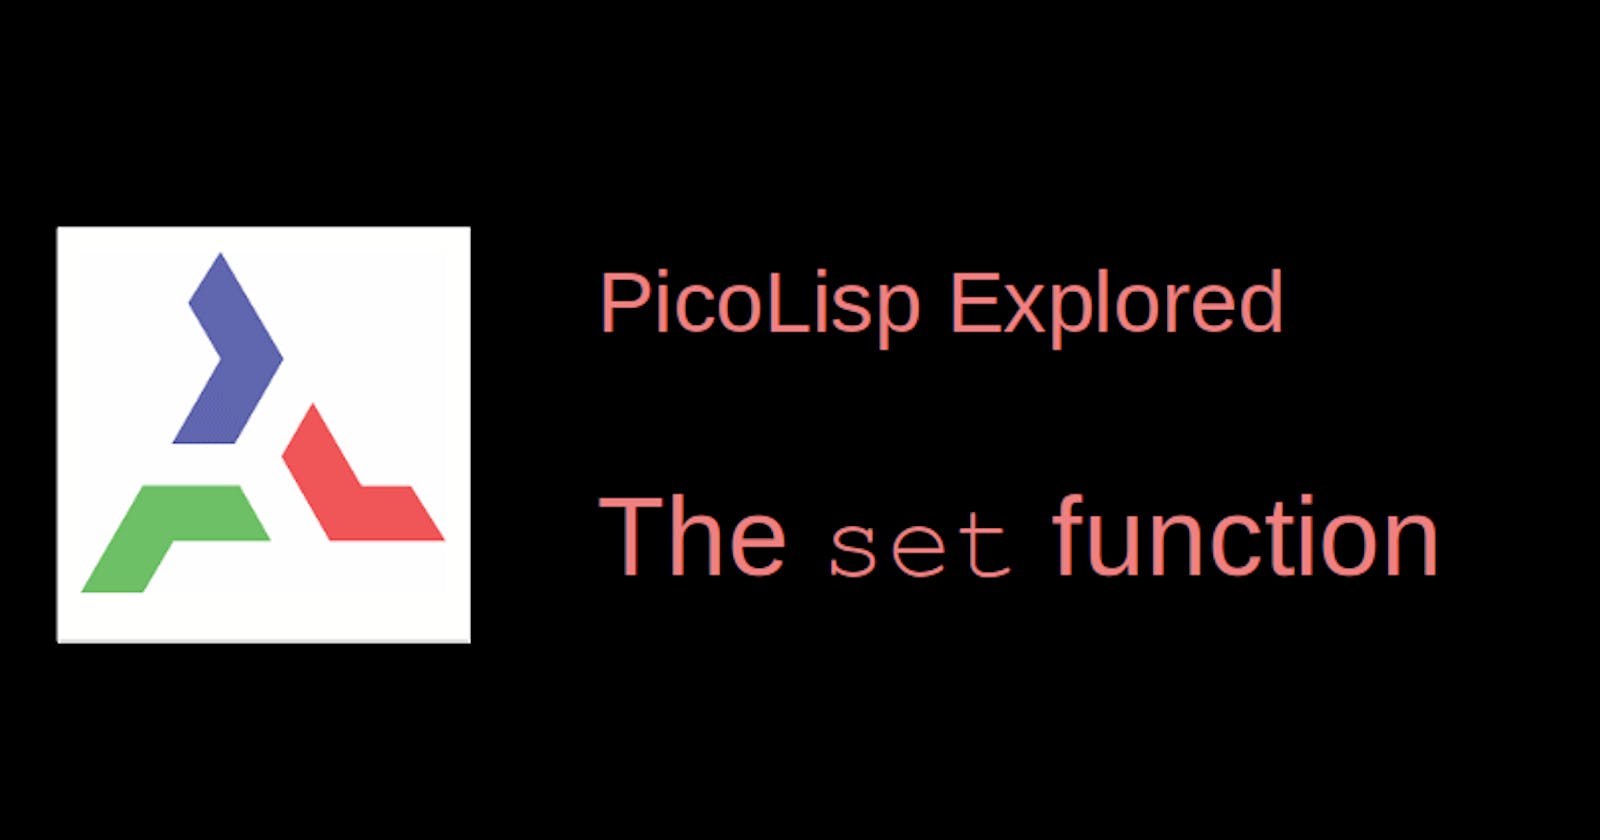 PicoLisp Explored: The SET function